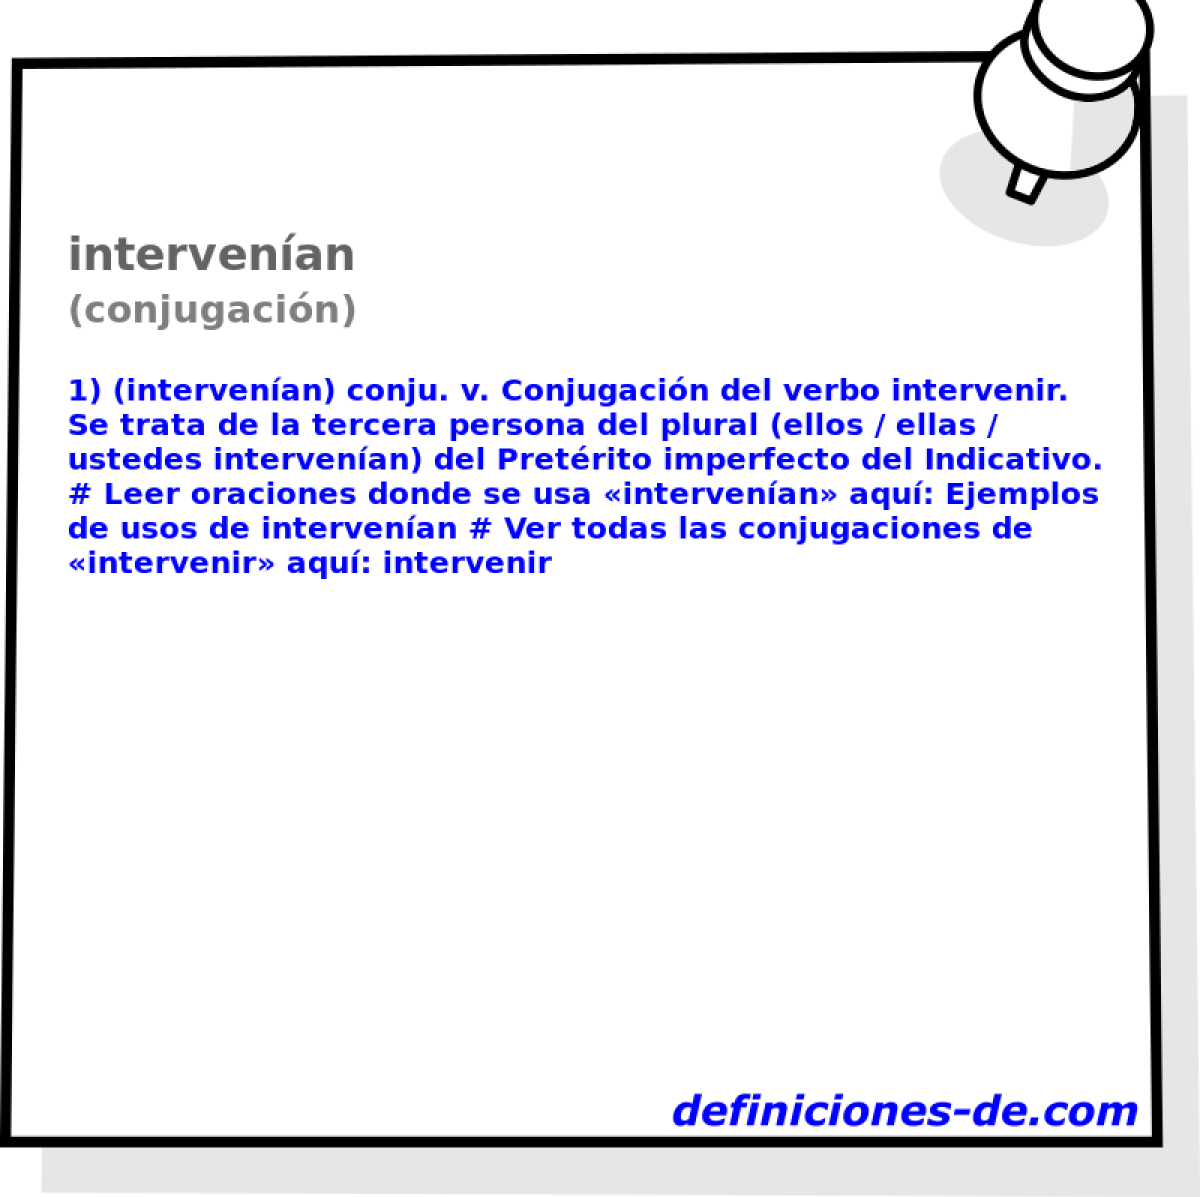 intervenan (conjugacin)